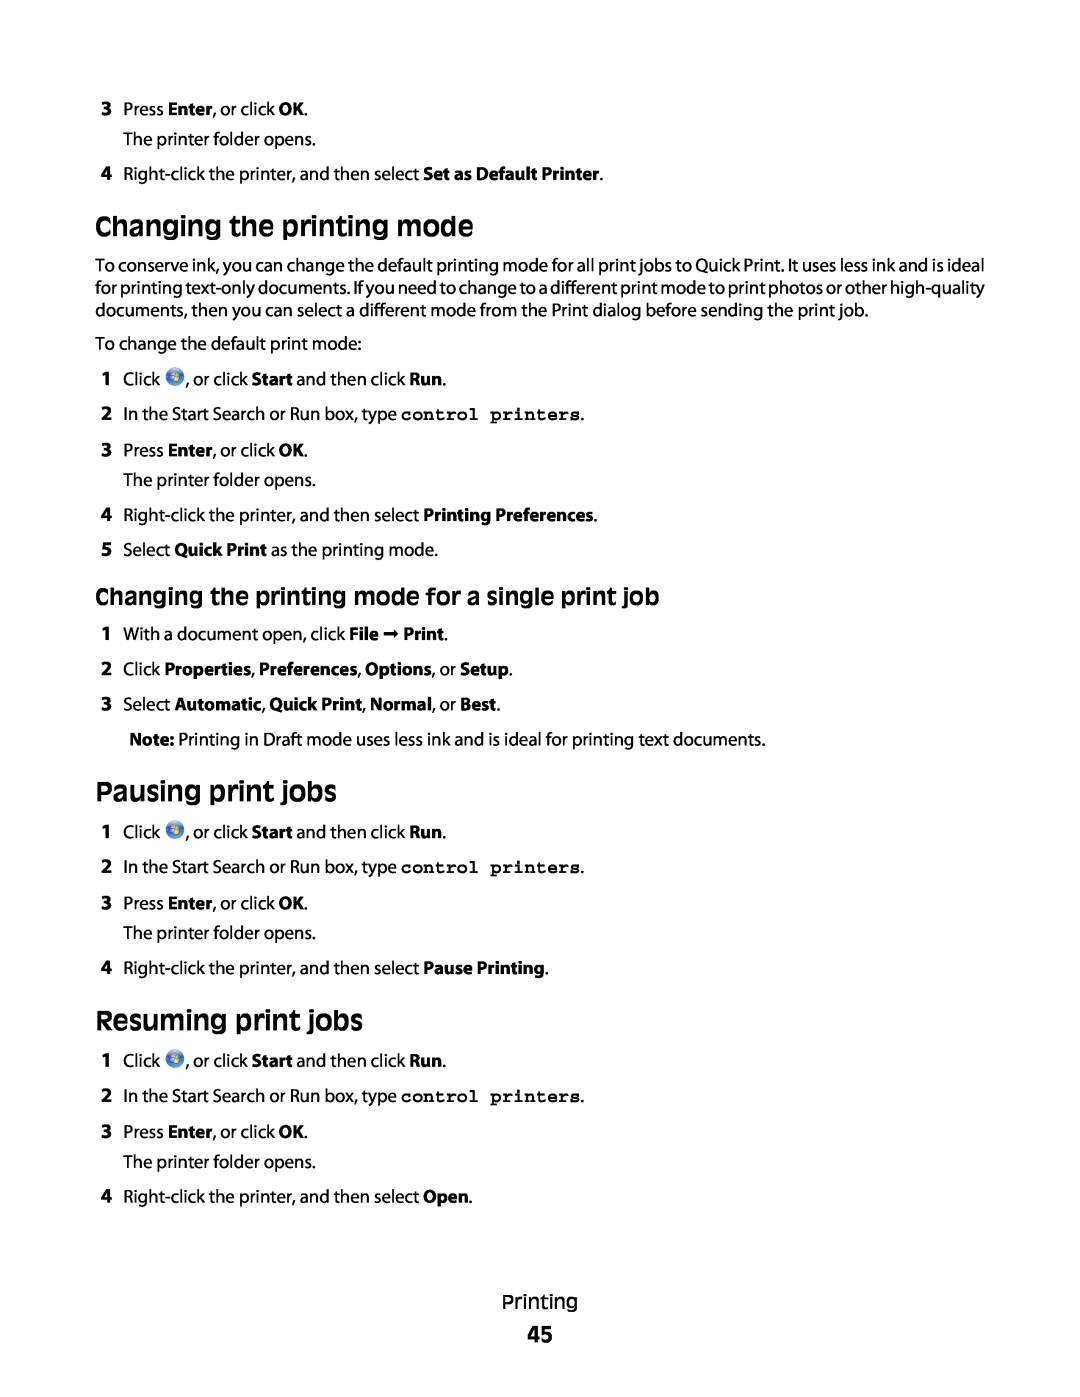 Dell V515W manual Changing the printing mode, Pausing print jobs, Resuming print jobs 